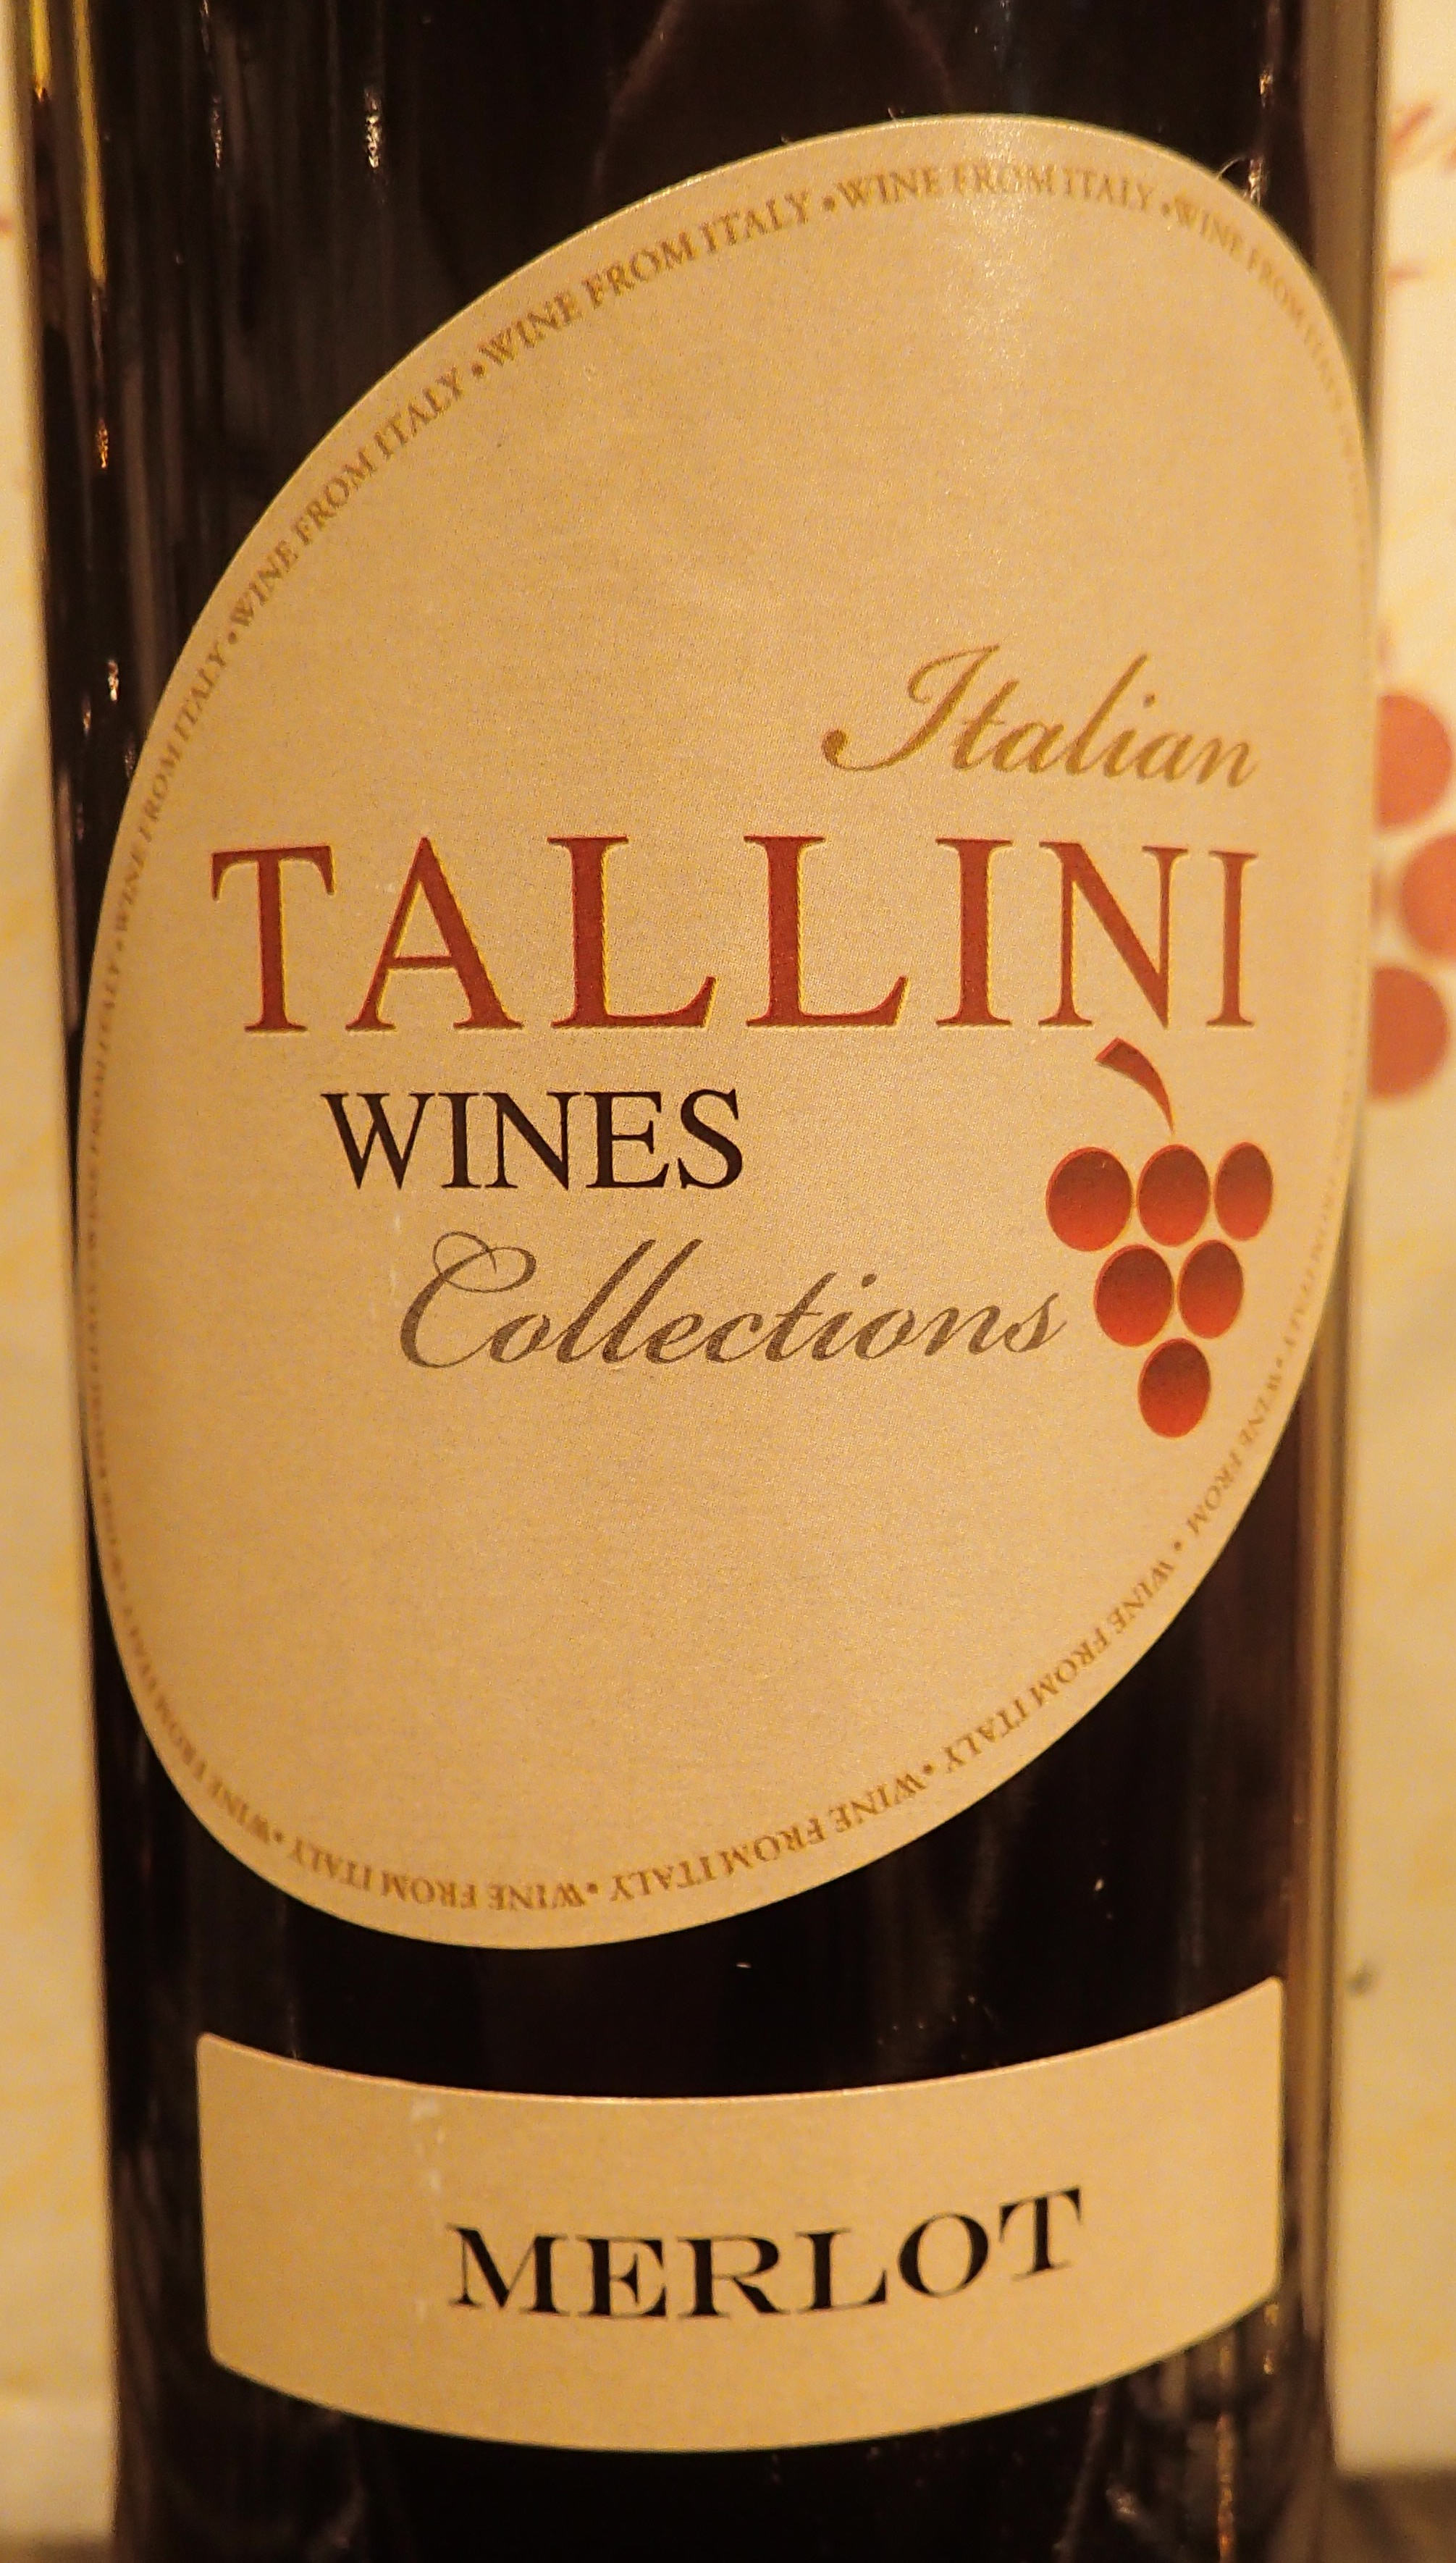 *** WITHDRAWN *** Case of six bottles of Italian Tallini Merlot wine CONDITION REPORT: